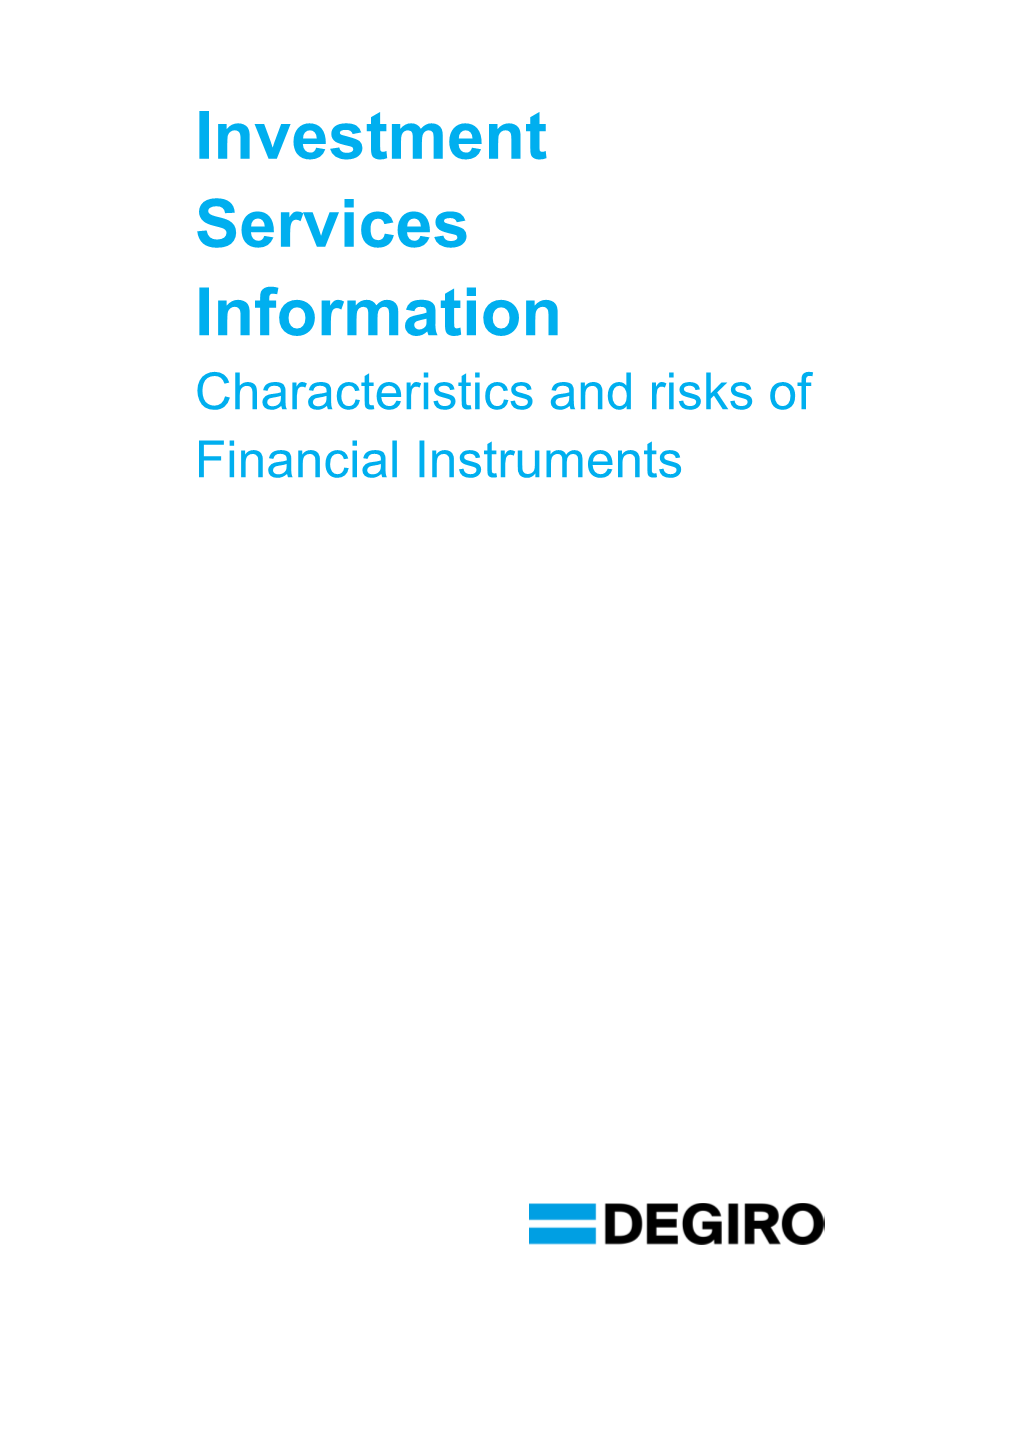 Characteristics and Risks of Financial Instruments